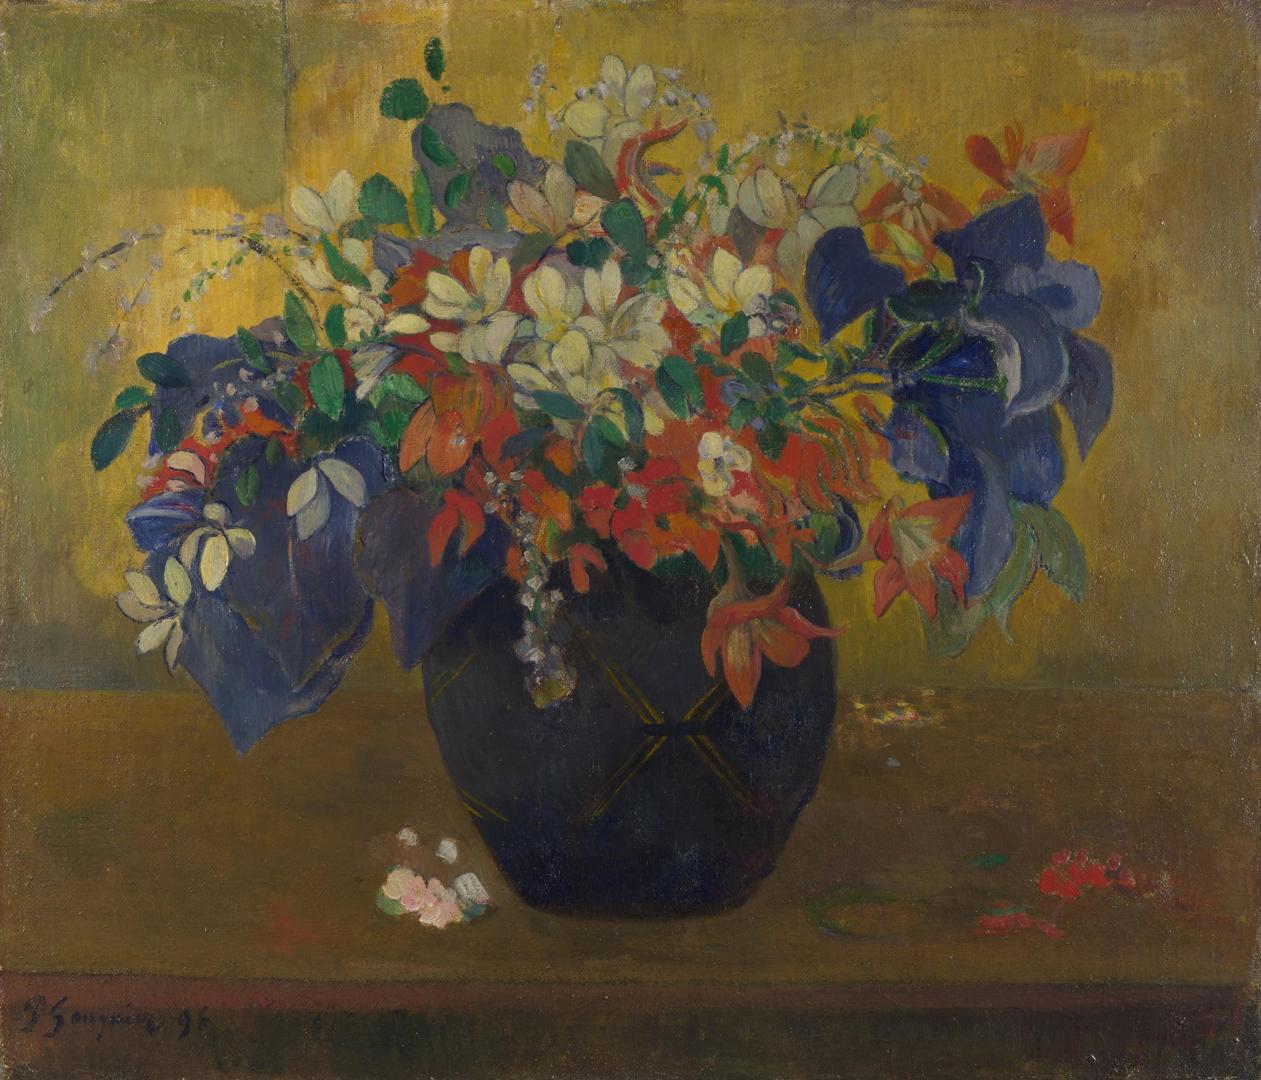 A Vase of Flowers by Paul Gauguin